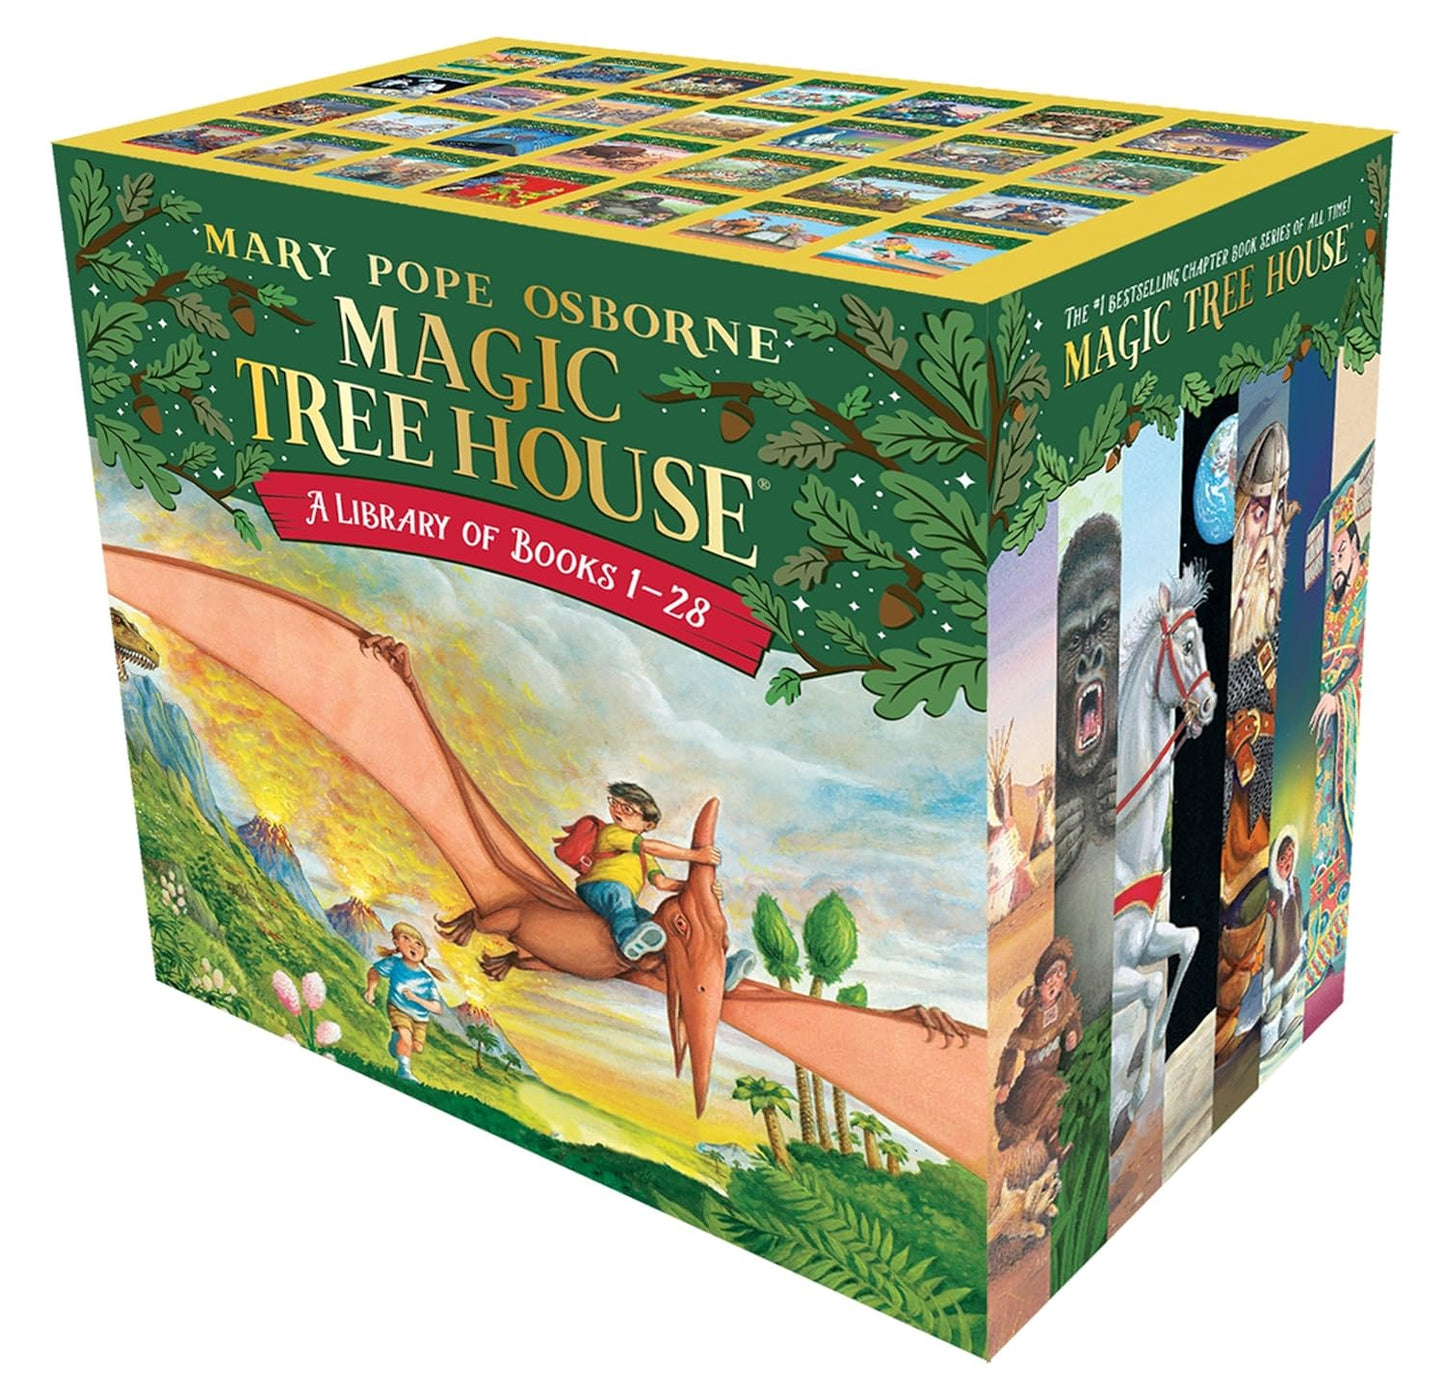 MAGIC TREE HOUSE BOXED SET 1-28